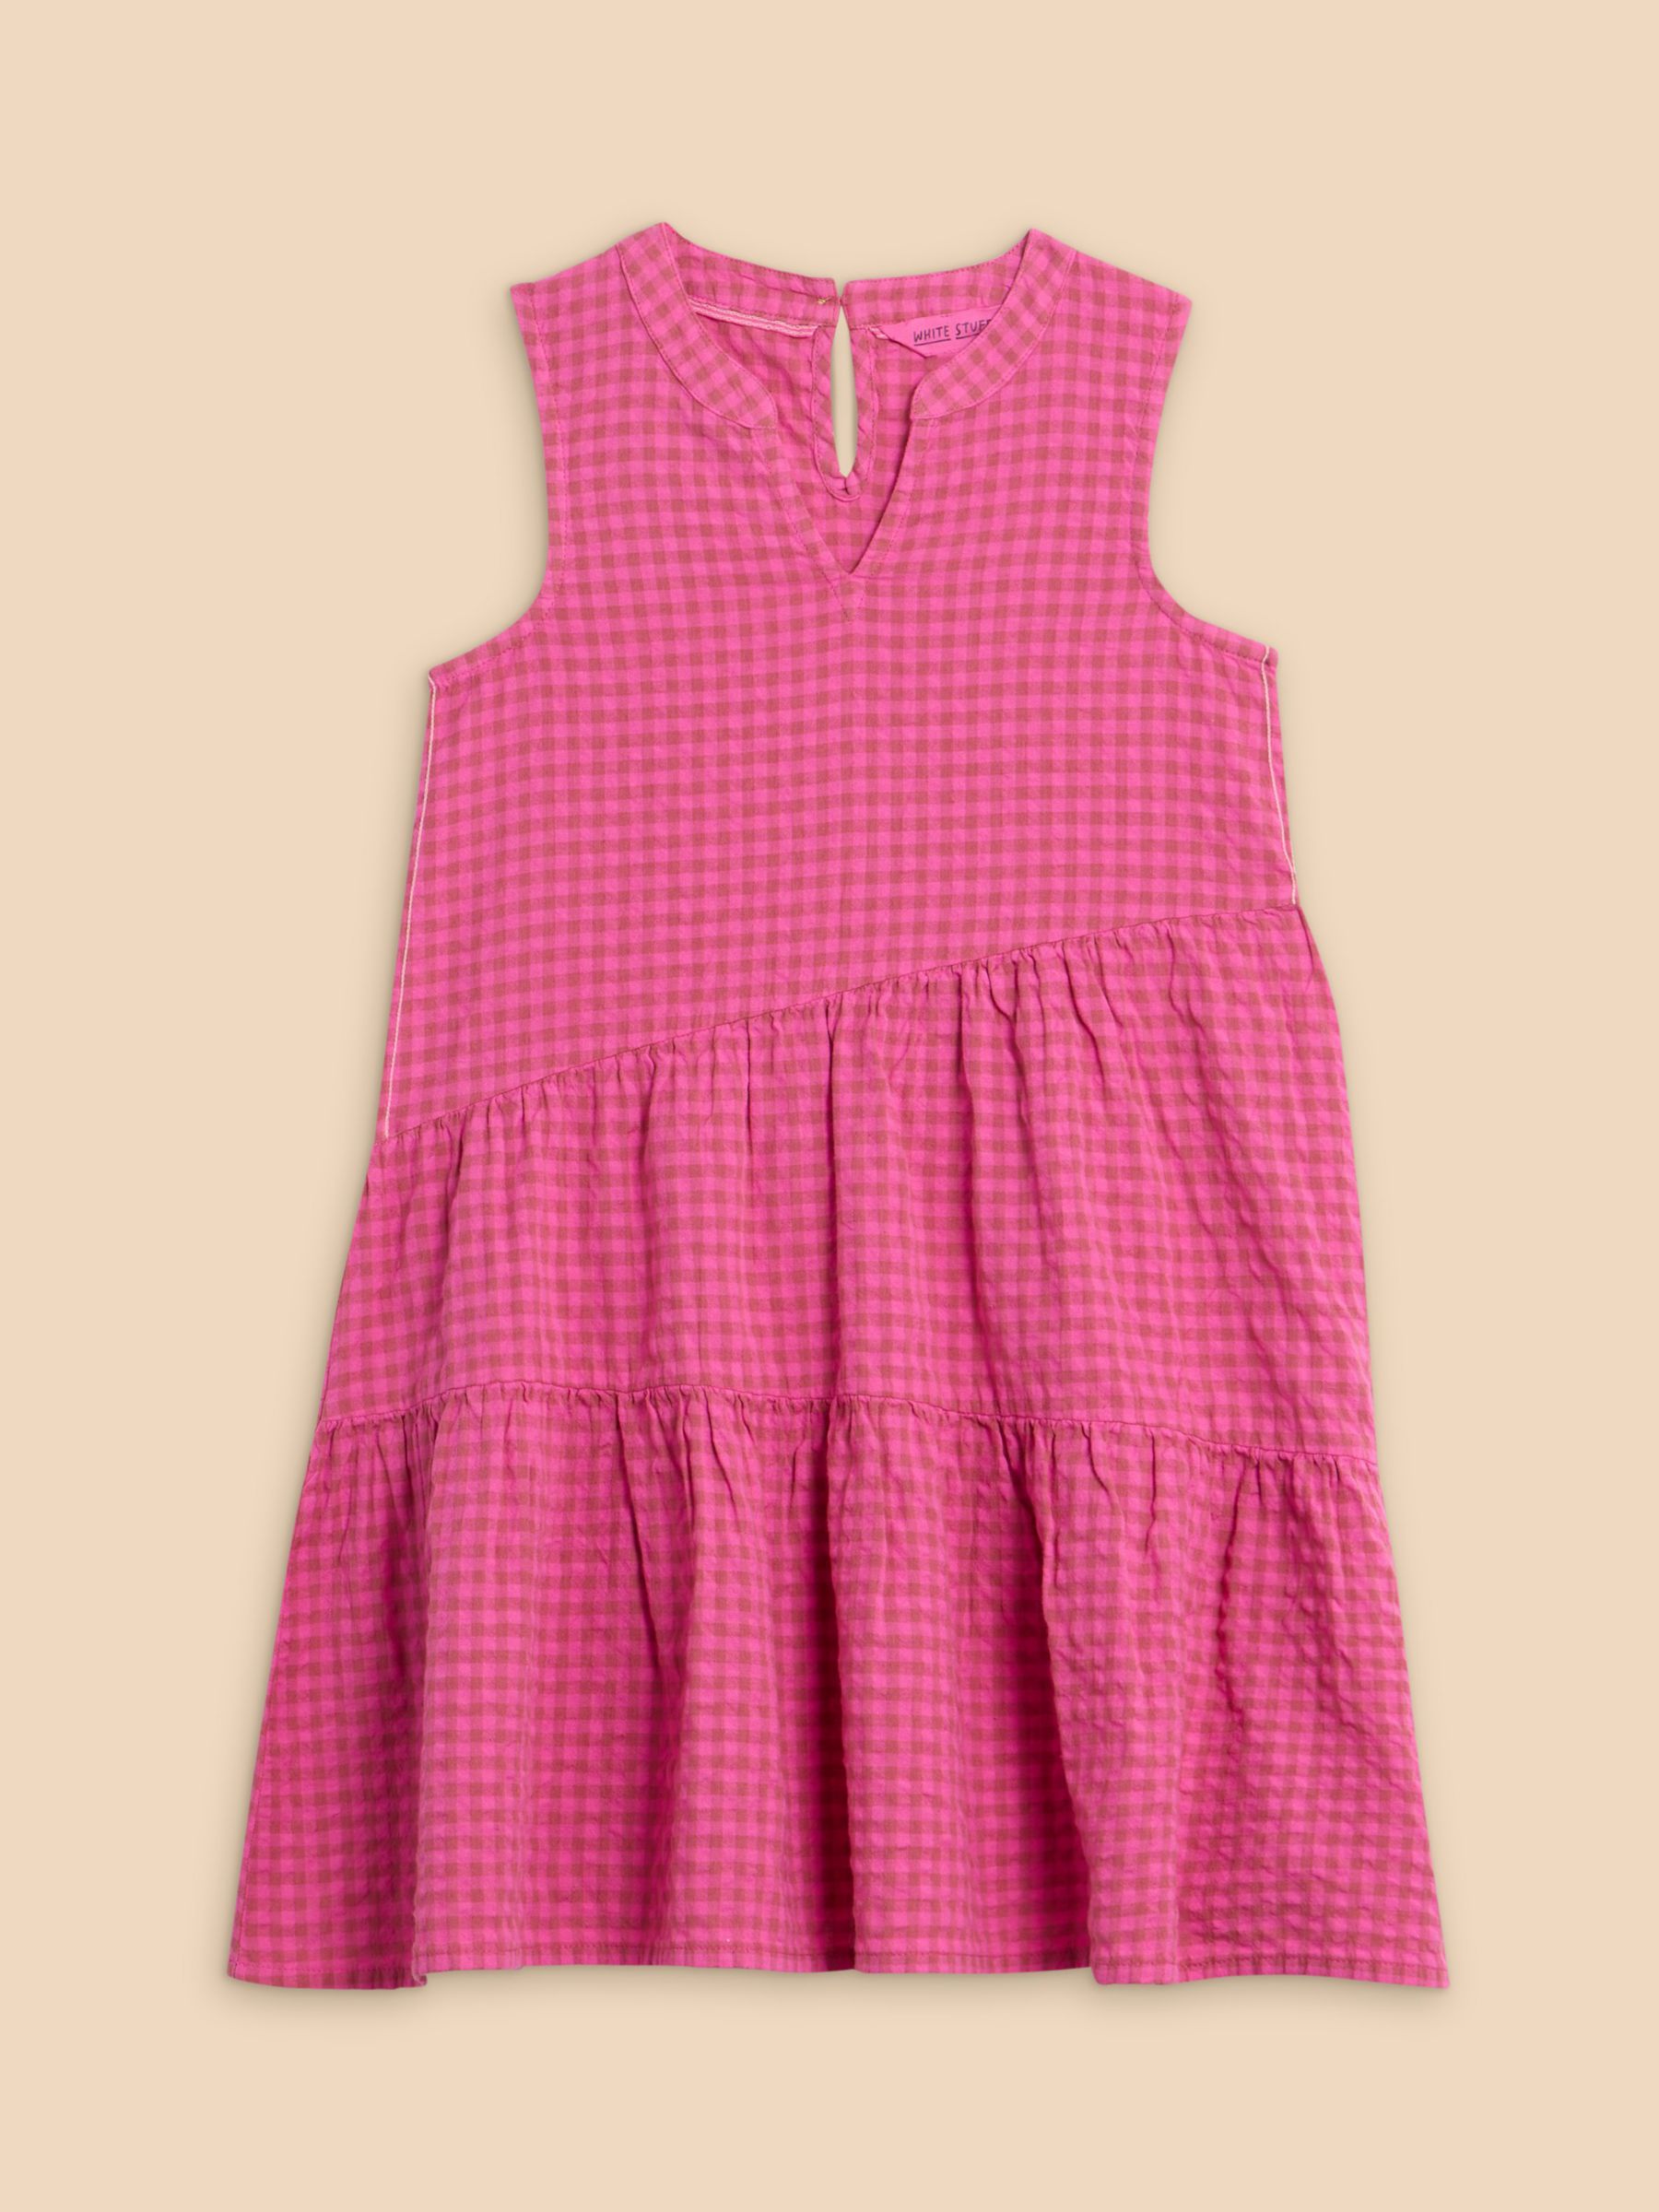 White Stuff Kids' Gingham Dress, Pink